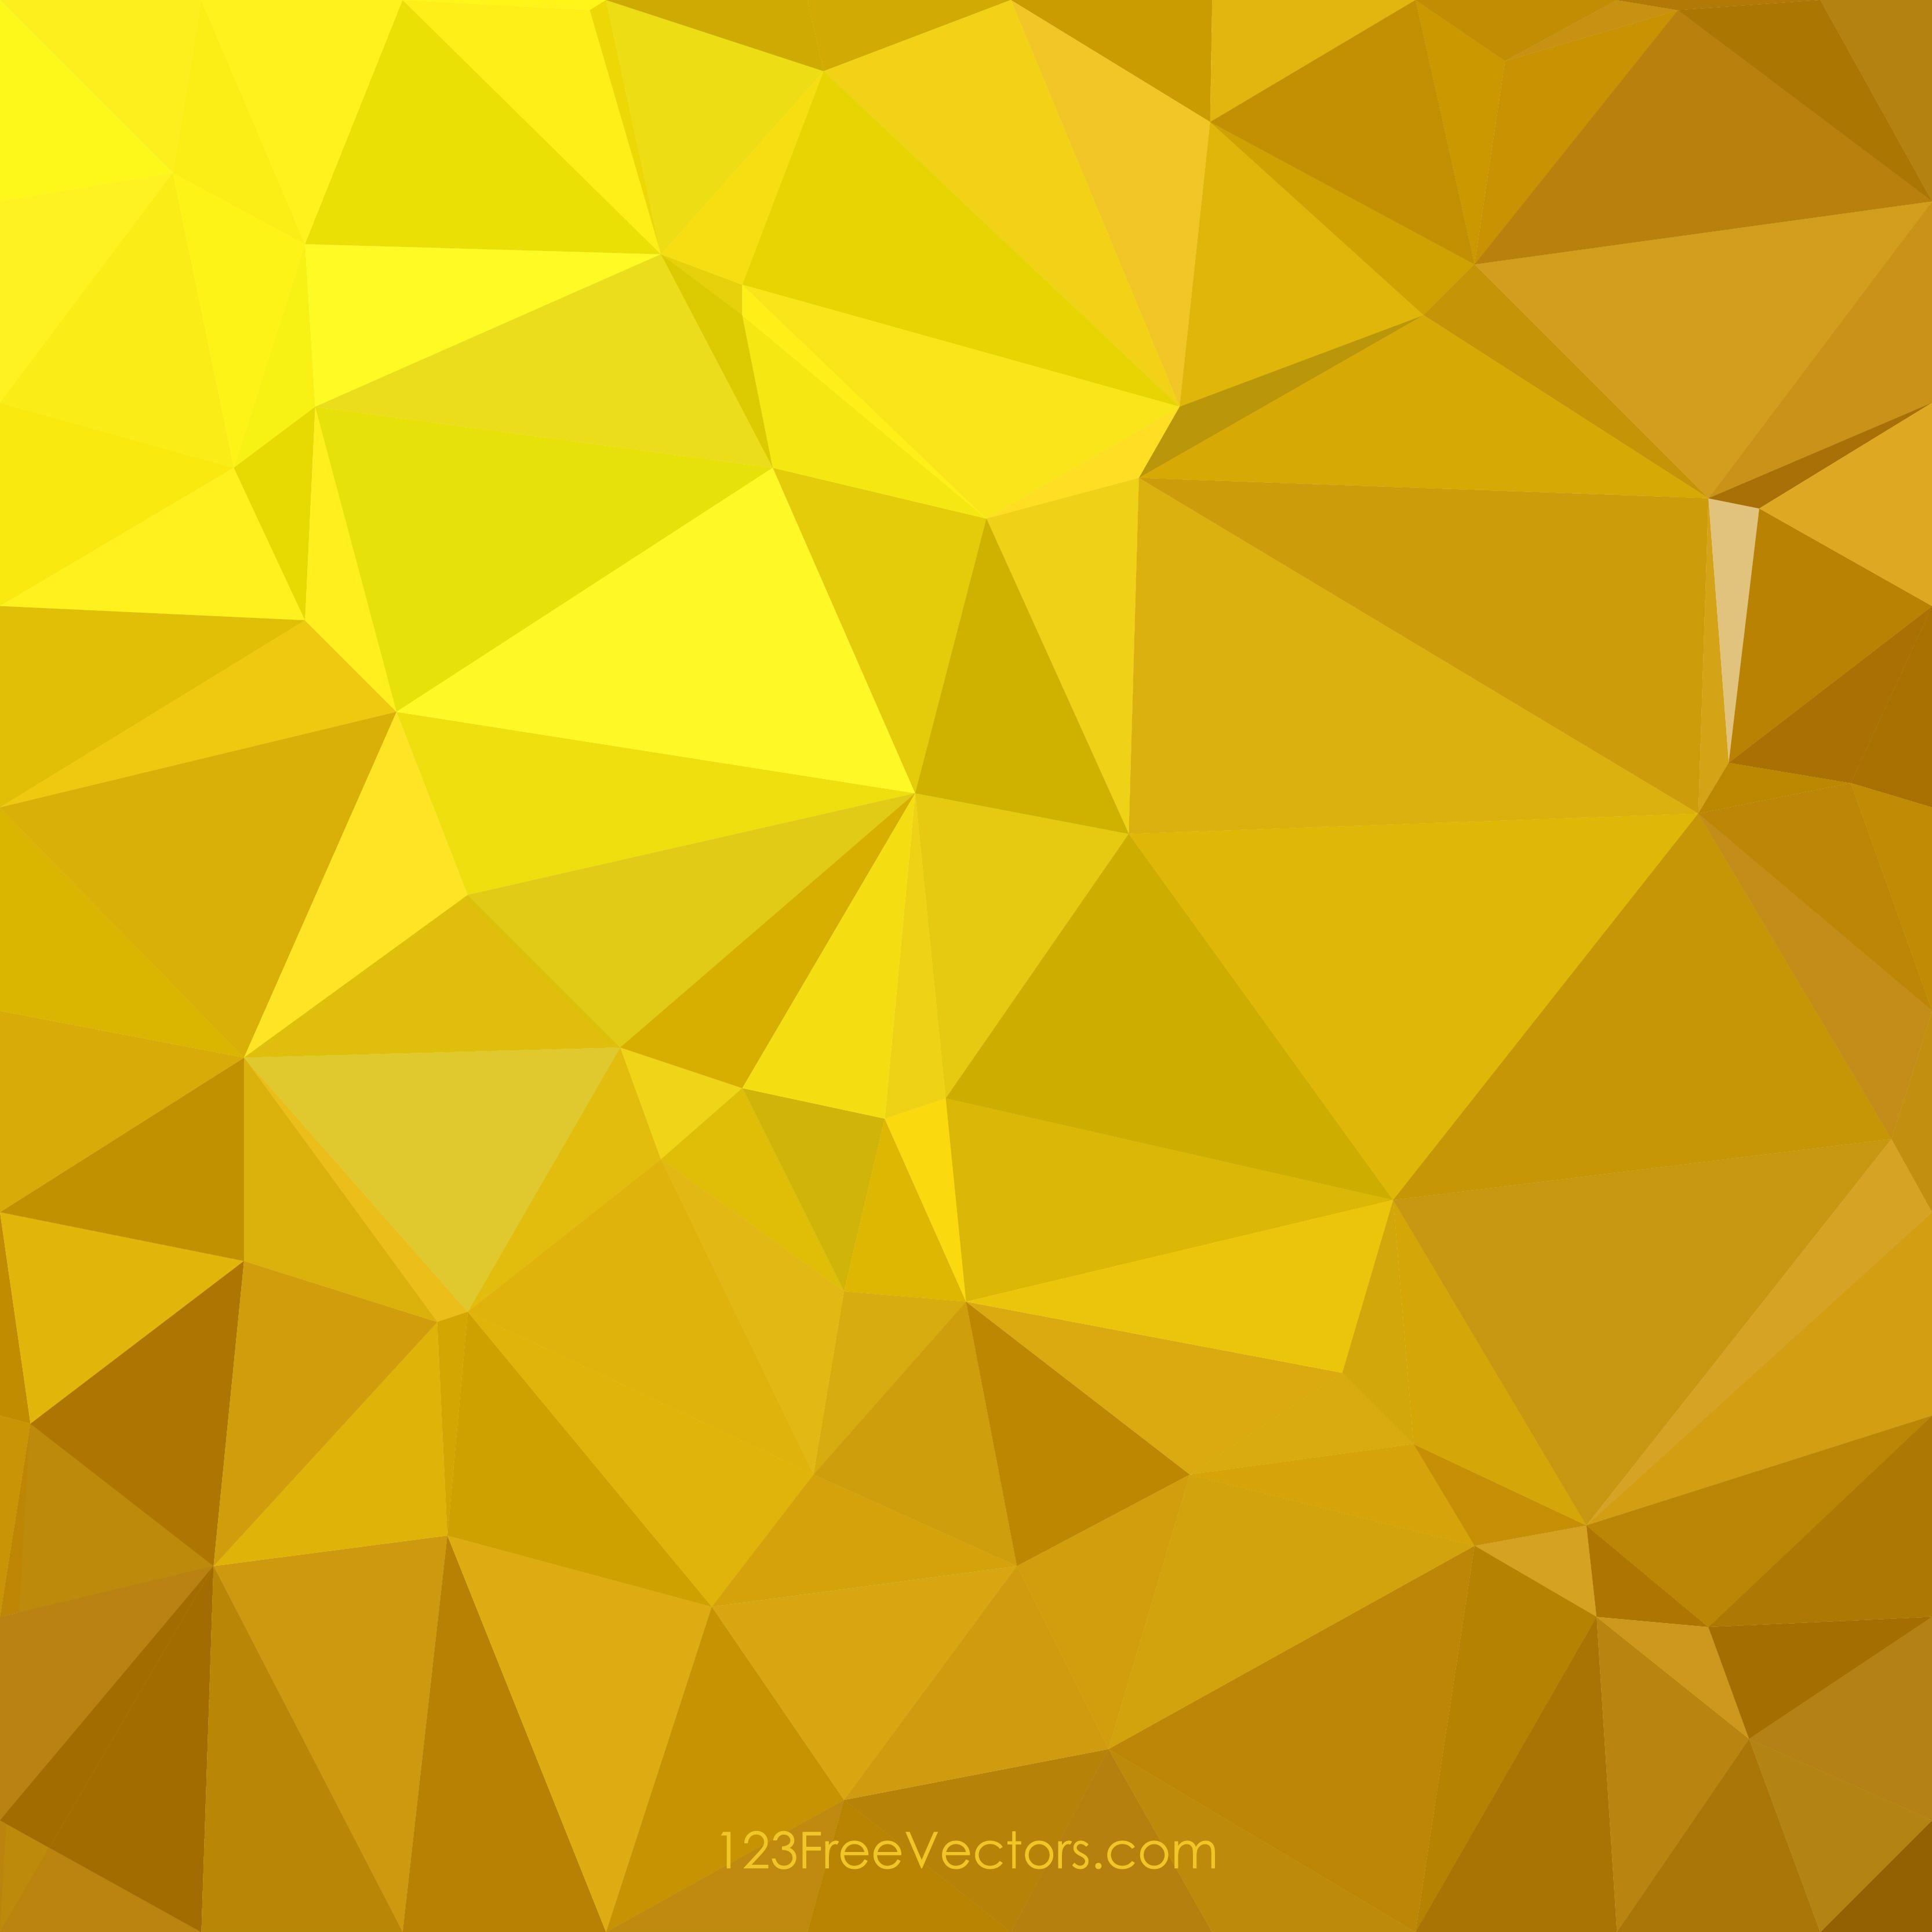 Gold Background Vectors. Download Free Vector Art & Graphics